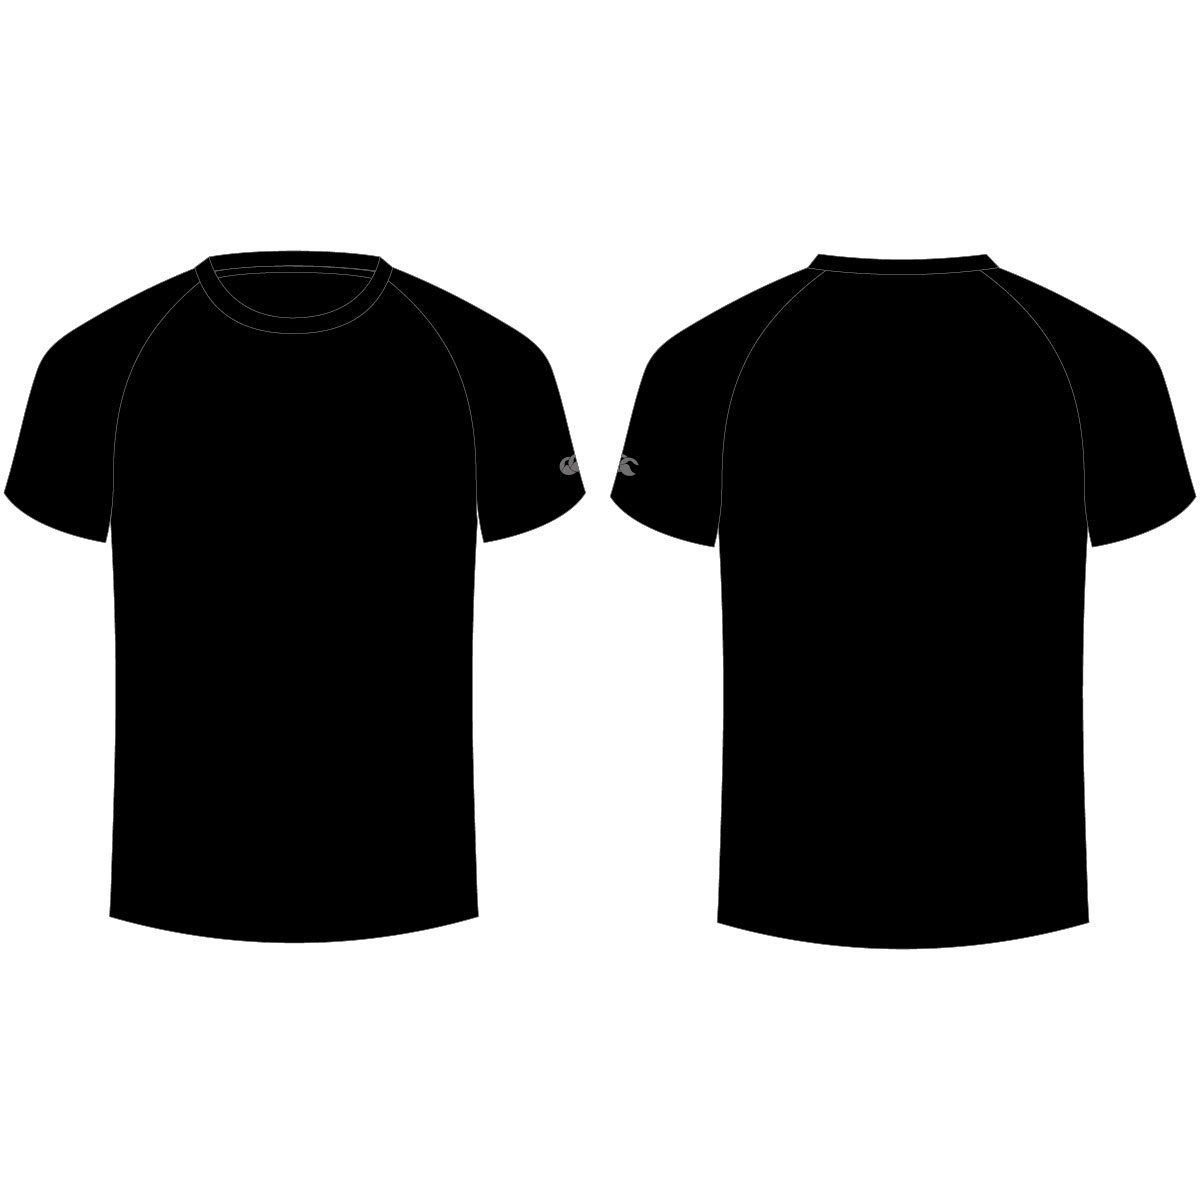 Trends For > Black T Shirt Model Template